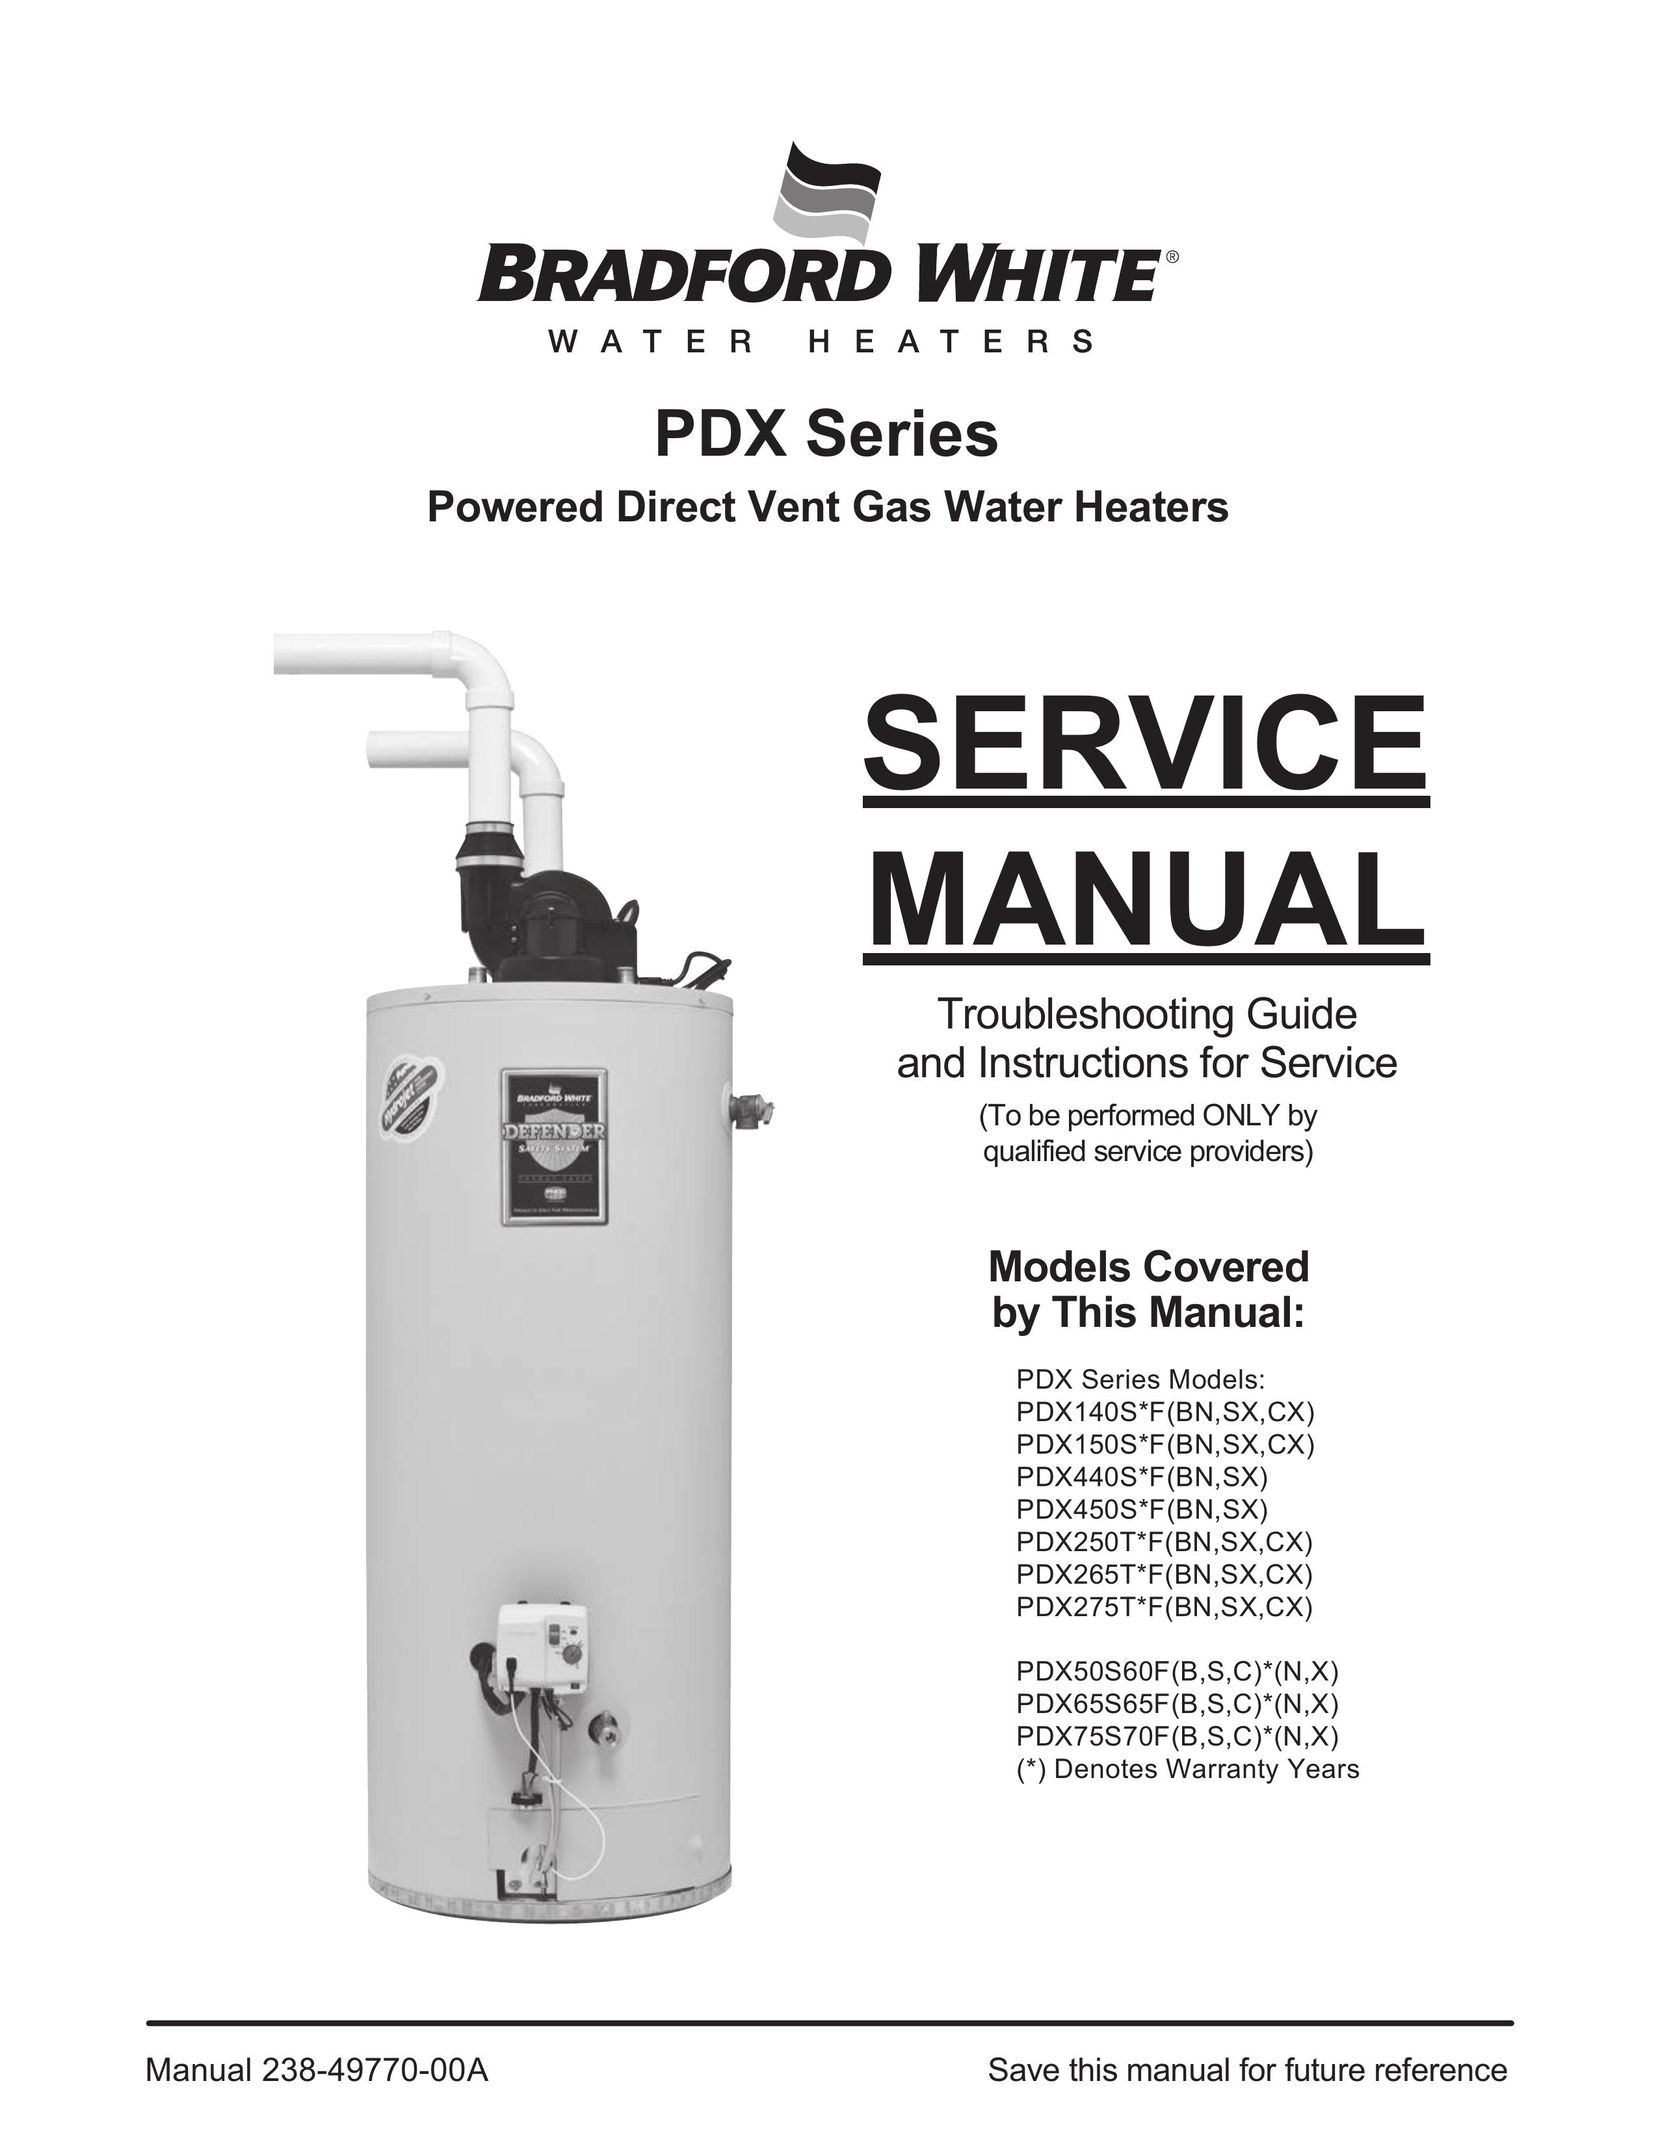 Honeywell PDX50S60F(B,S,C)*(N,X) Water Heater User Manual